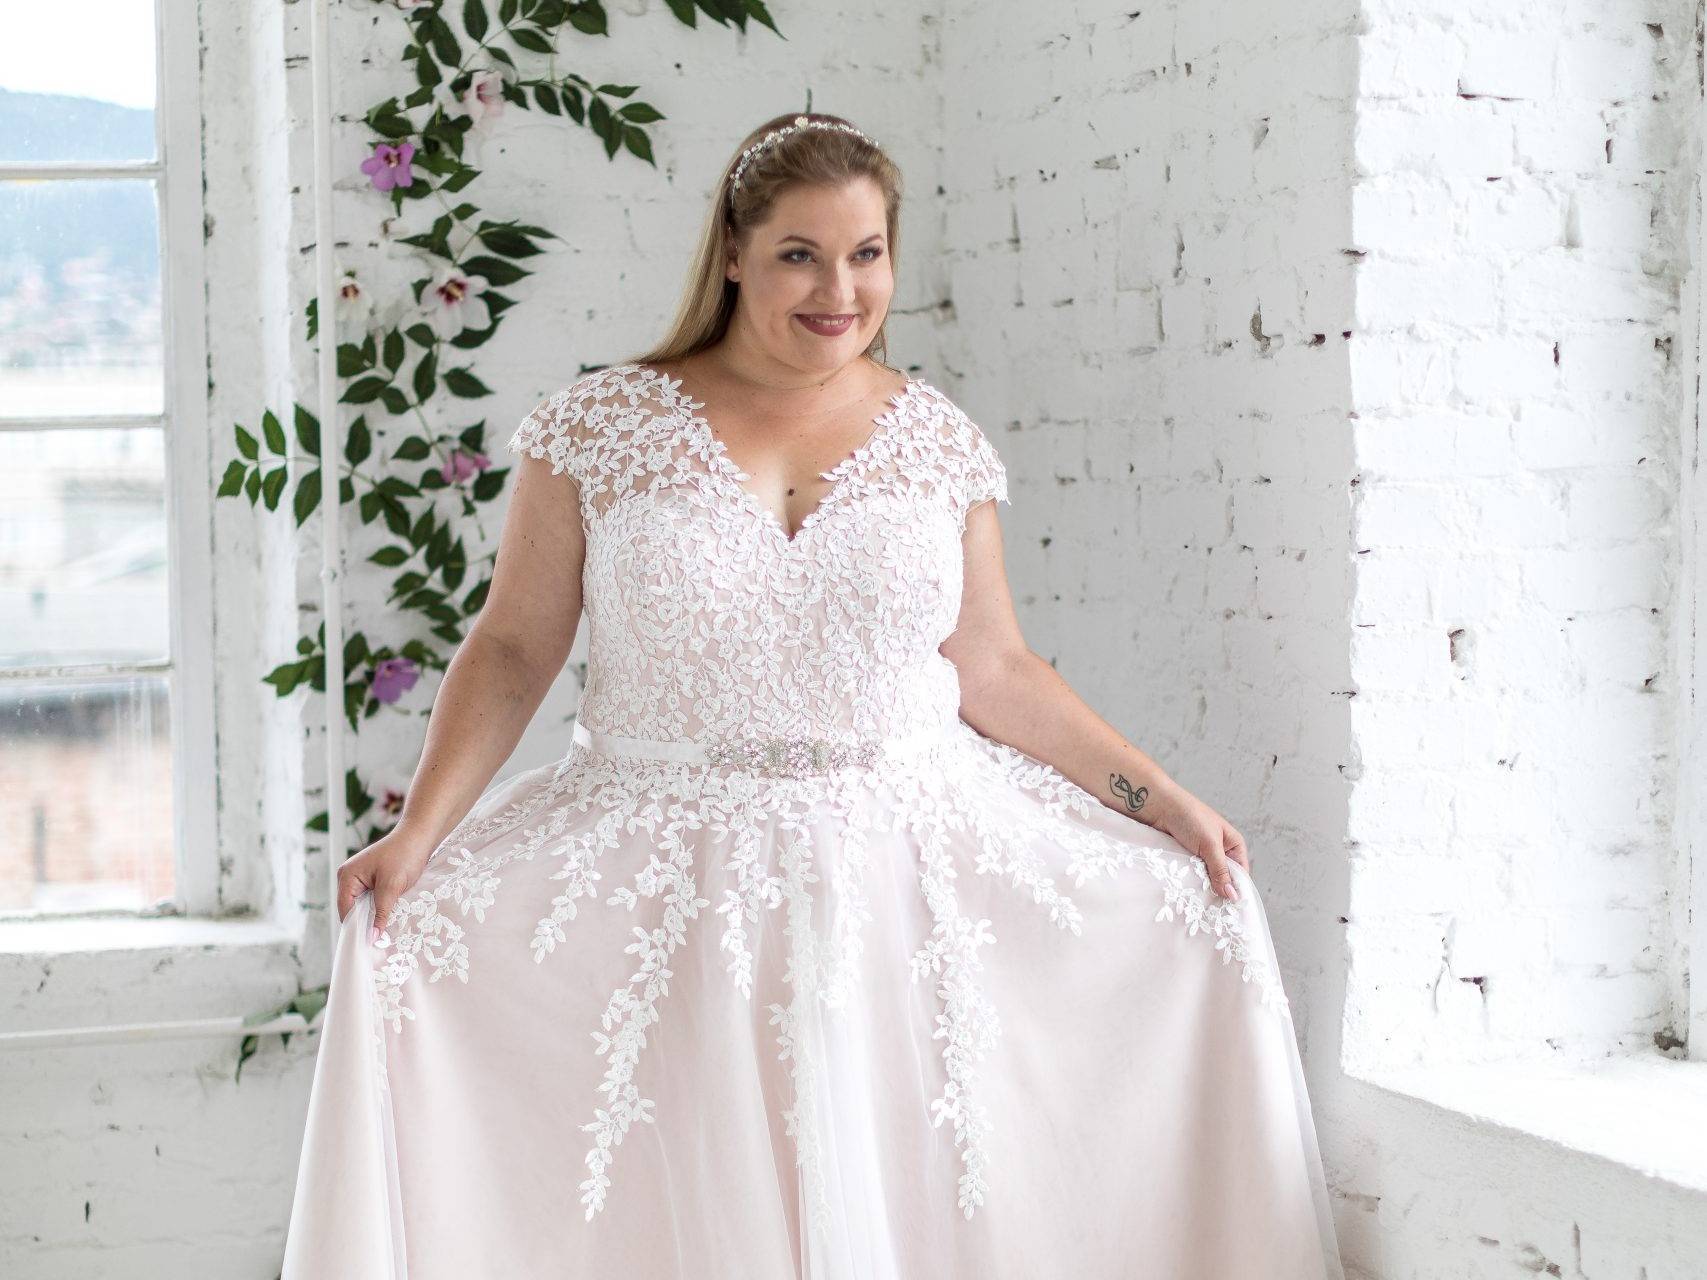 Foster støvle Mirakuløs Buy plus size wedding dress with sleeves